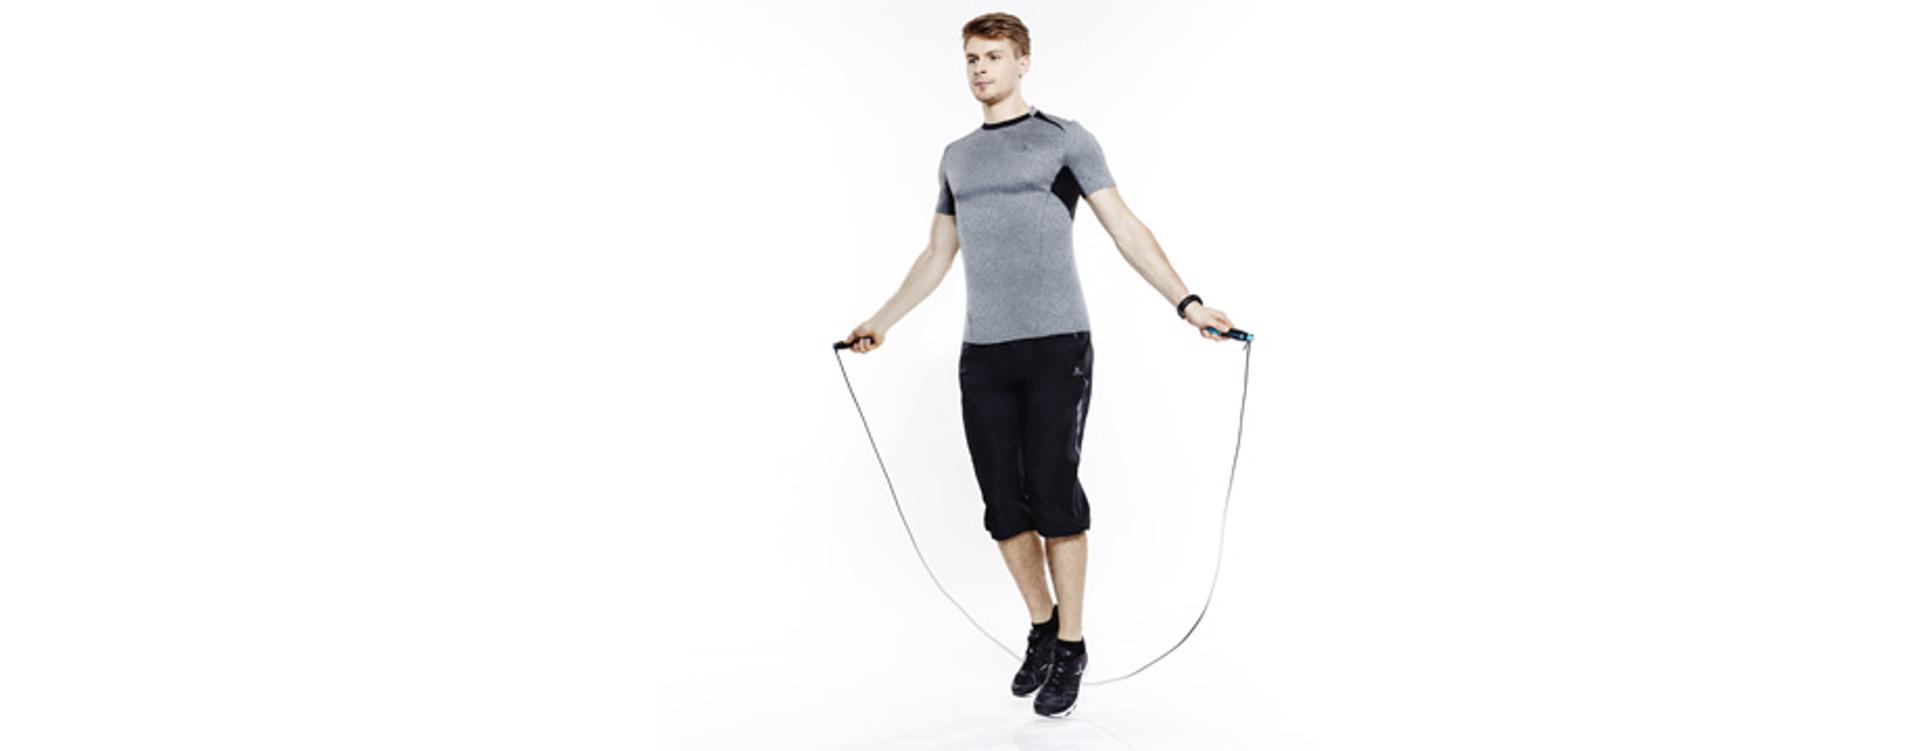 fitzine-cardio-training-exercice-programme-minceur-corde-a-sauter-header